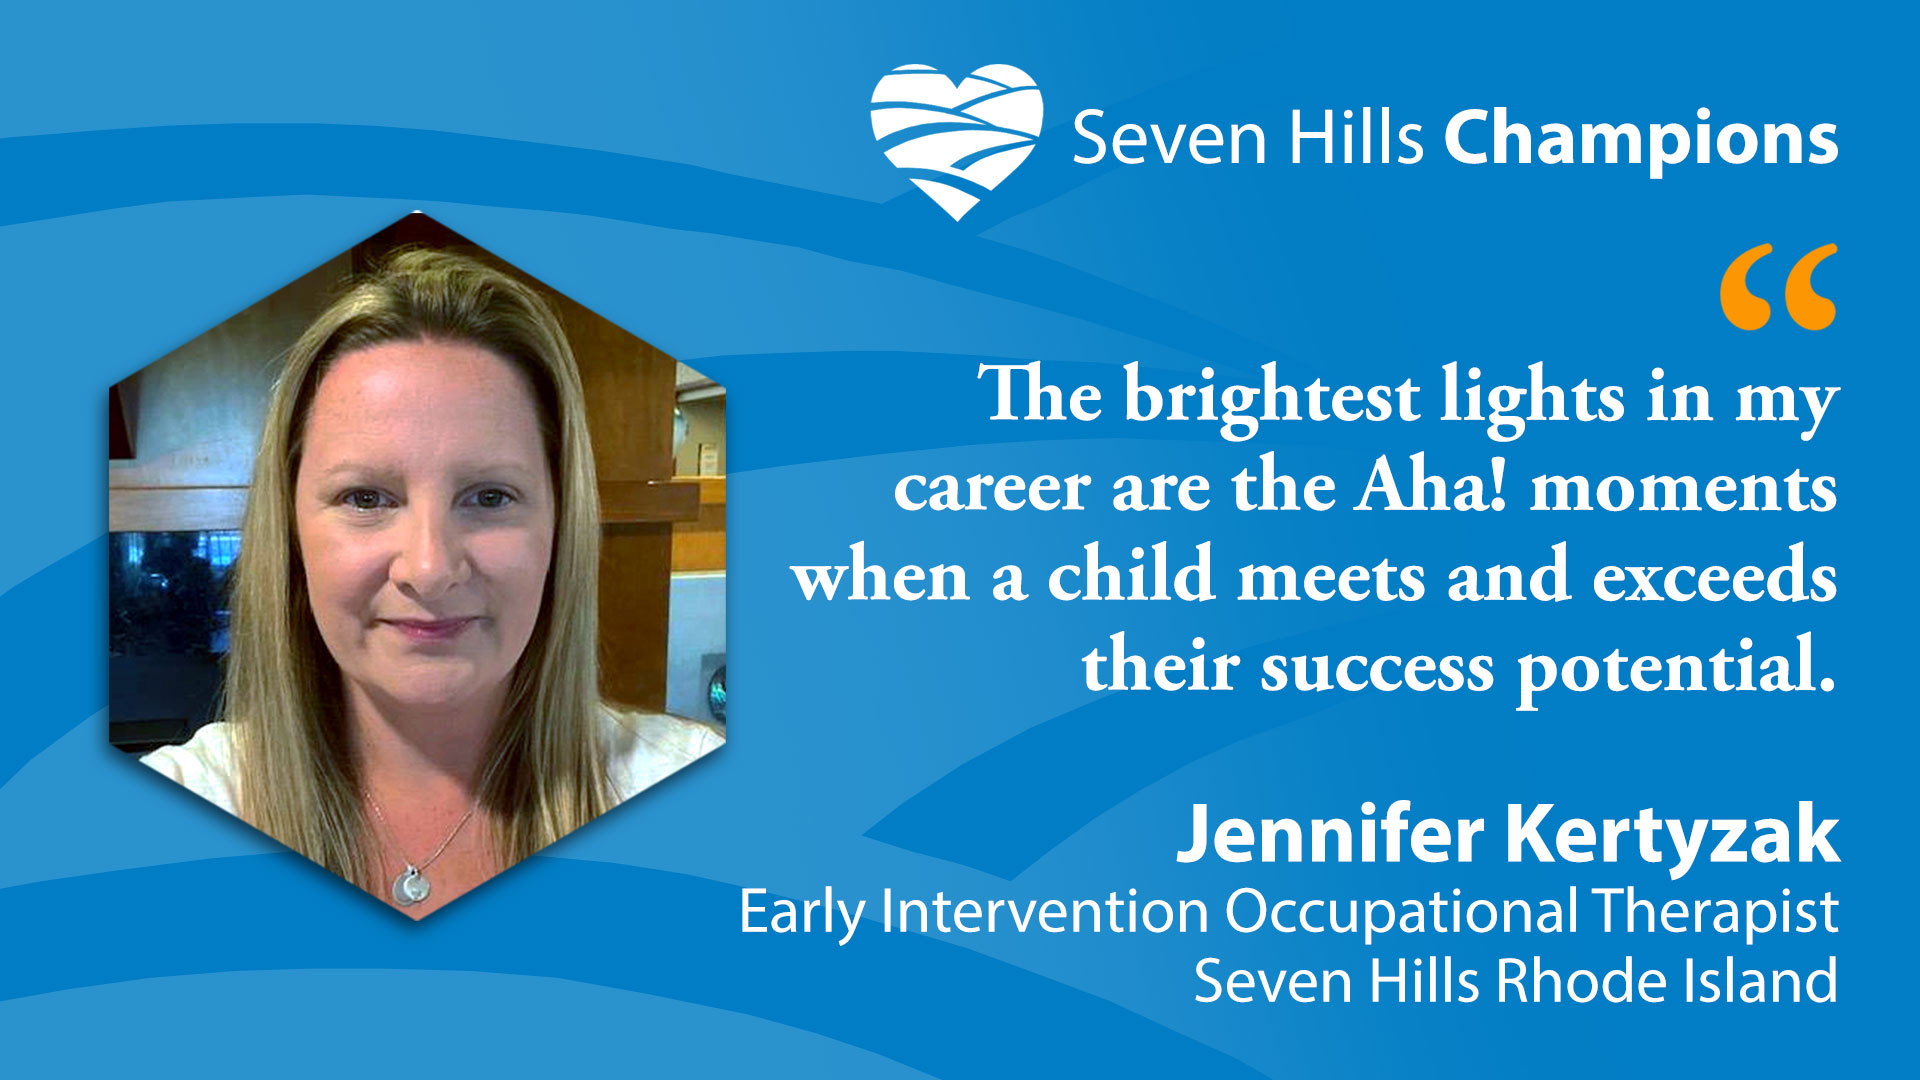 Introducing Seven Hills Champion Jennifer Kertyzak, Early Intervention Occupational Therapist, Seven Hills Rhode Island